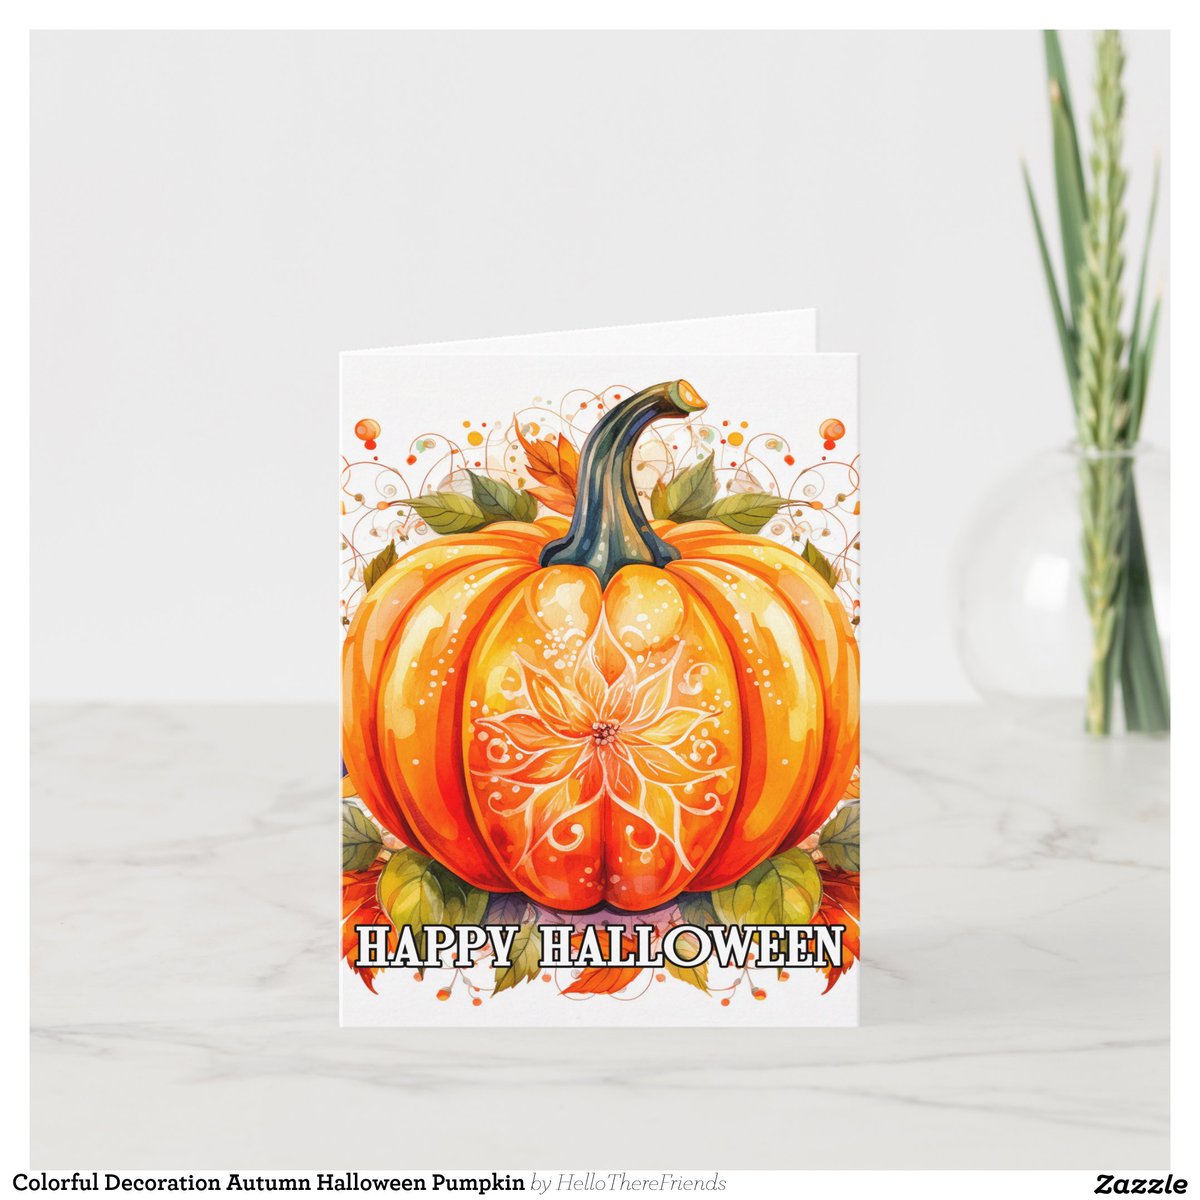 Colorful Decoration Autumn Halloween Pumpkin Card→zazzle.com/z/akq78o89?rf=…

#GreetingCards #HalloweenCards #HappyHalloween #Pumpkins #Horror #HalloweenArt #TrickOrTreat #HauntedHouse #HappyHalloweenCards #Macabre